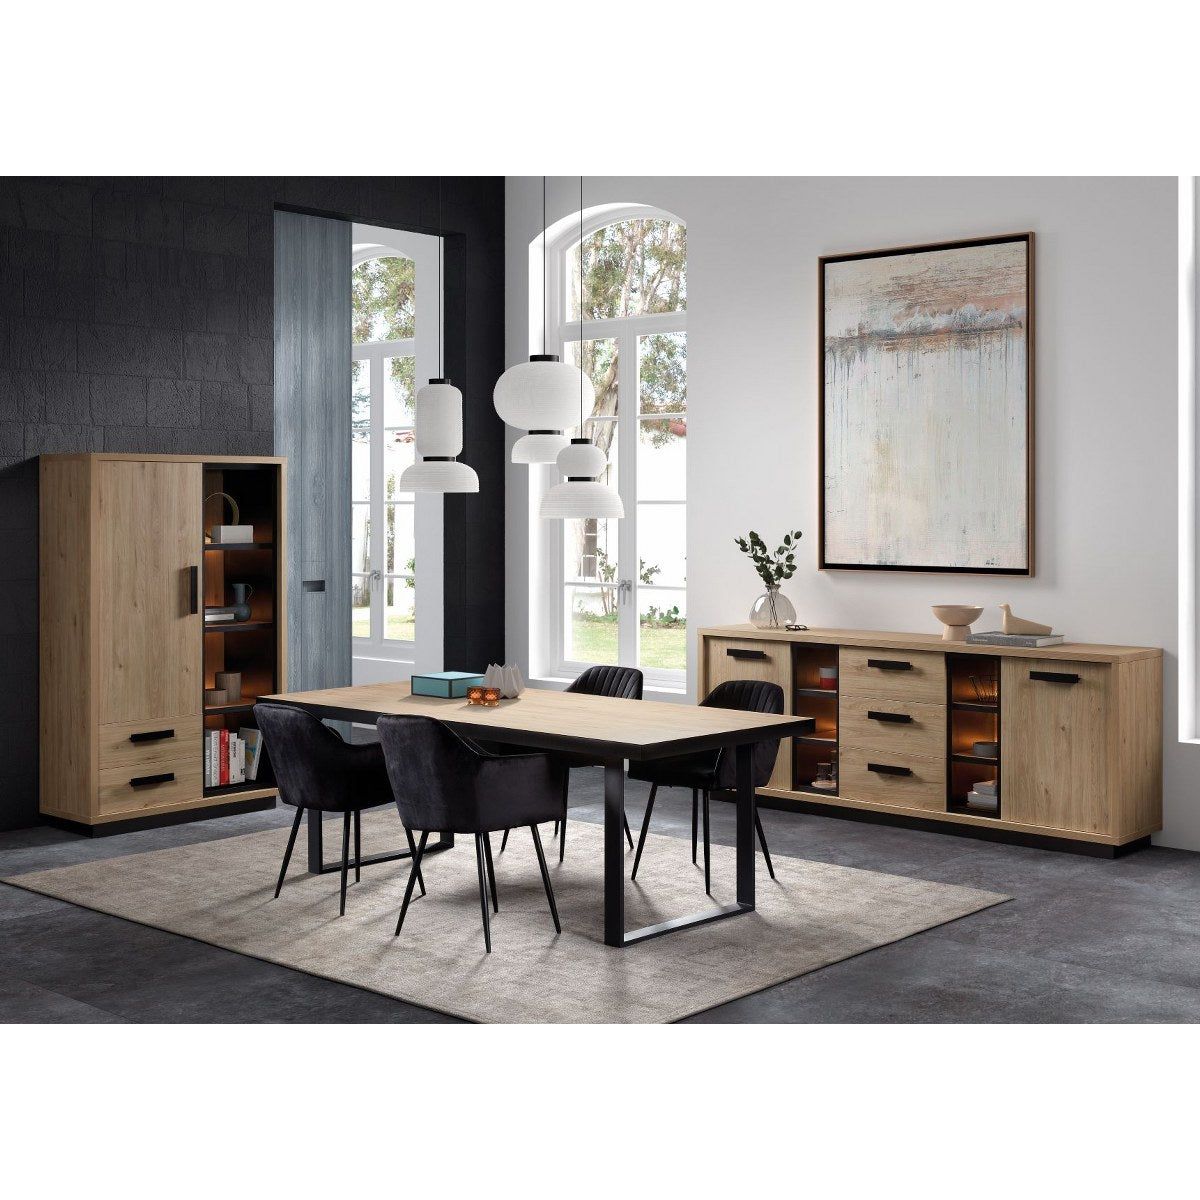 Table | Furniture series Tilly | brown, natural, black